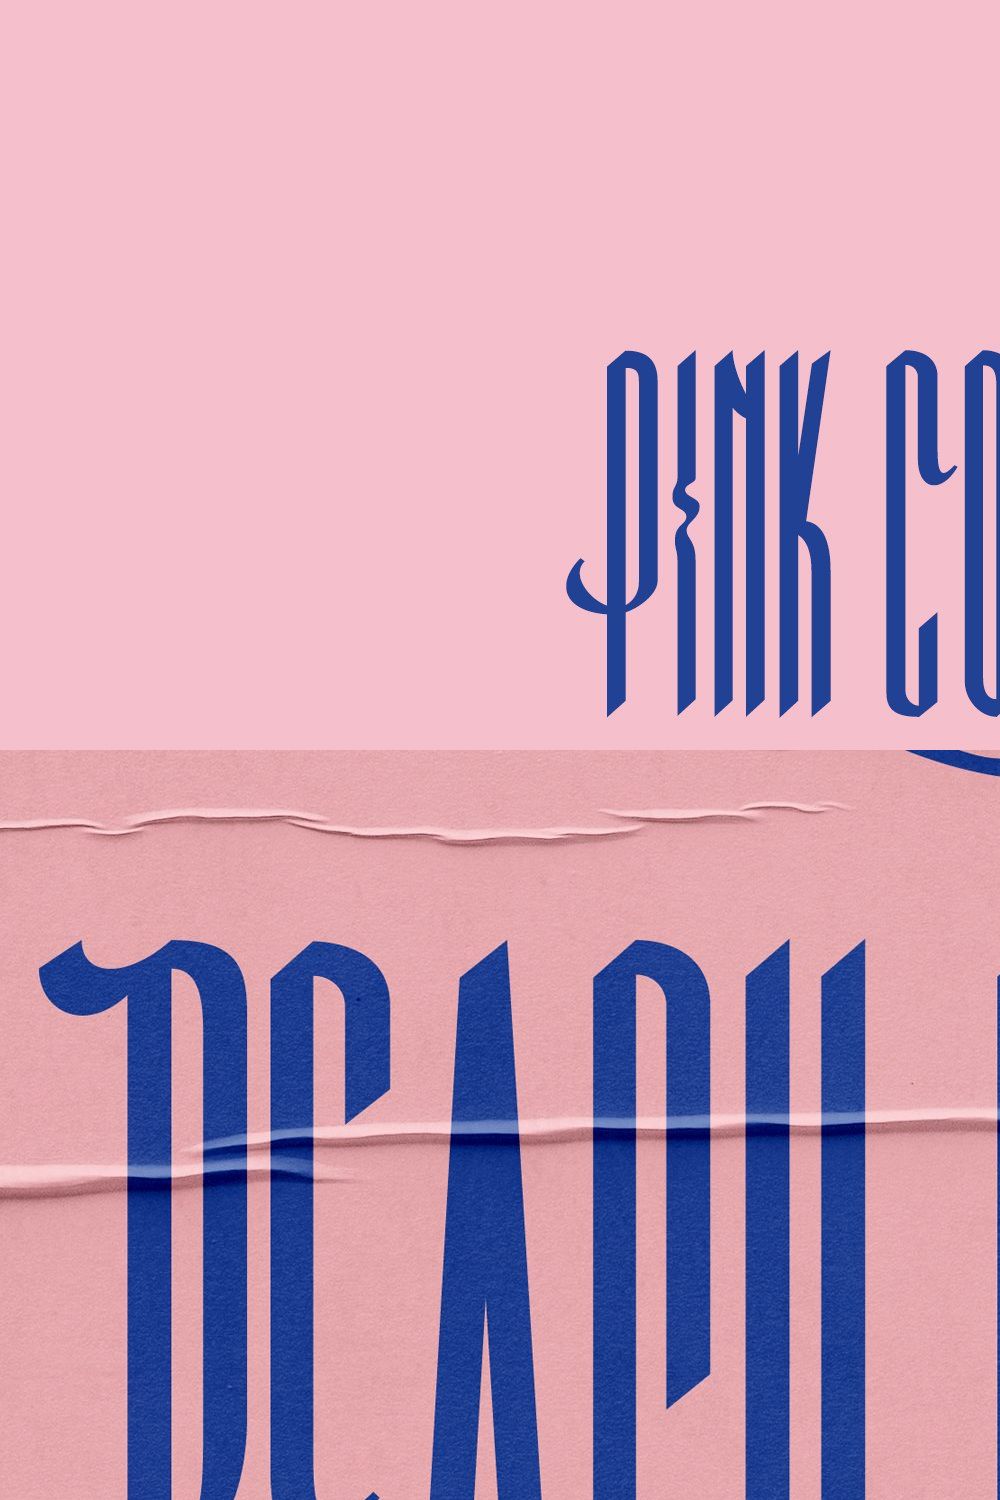 Pink Coast Typefaces pinterest preview image.